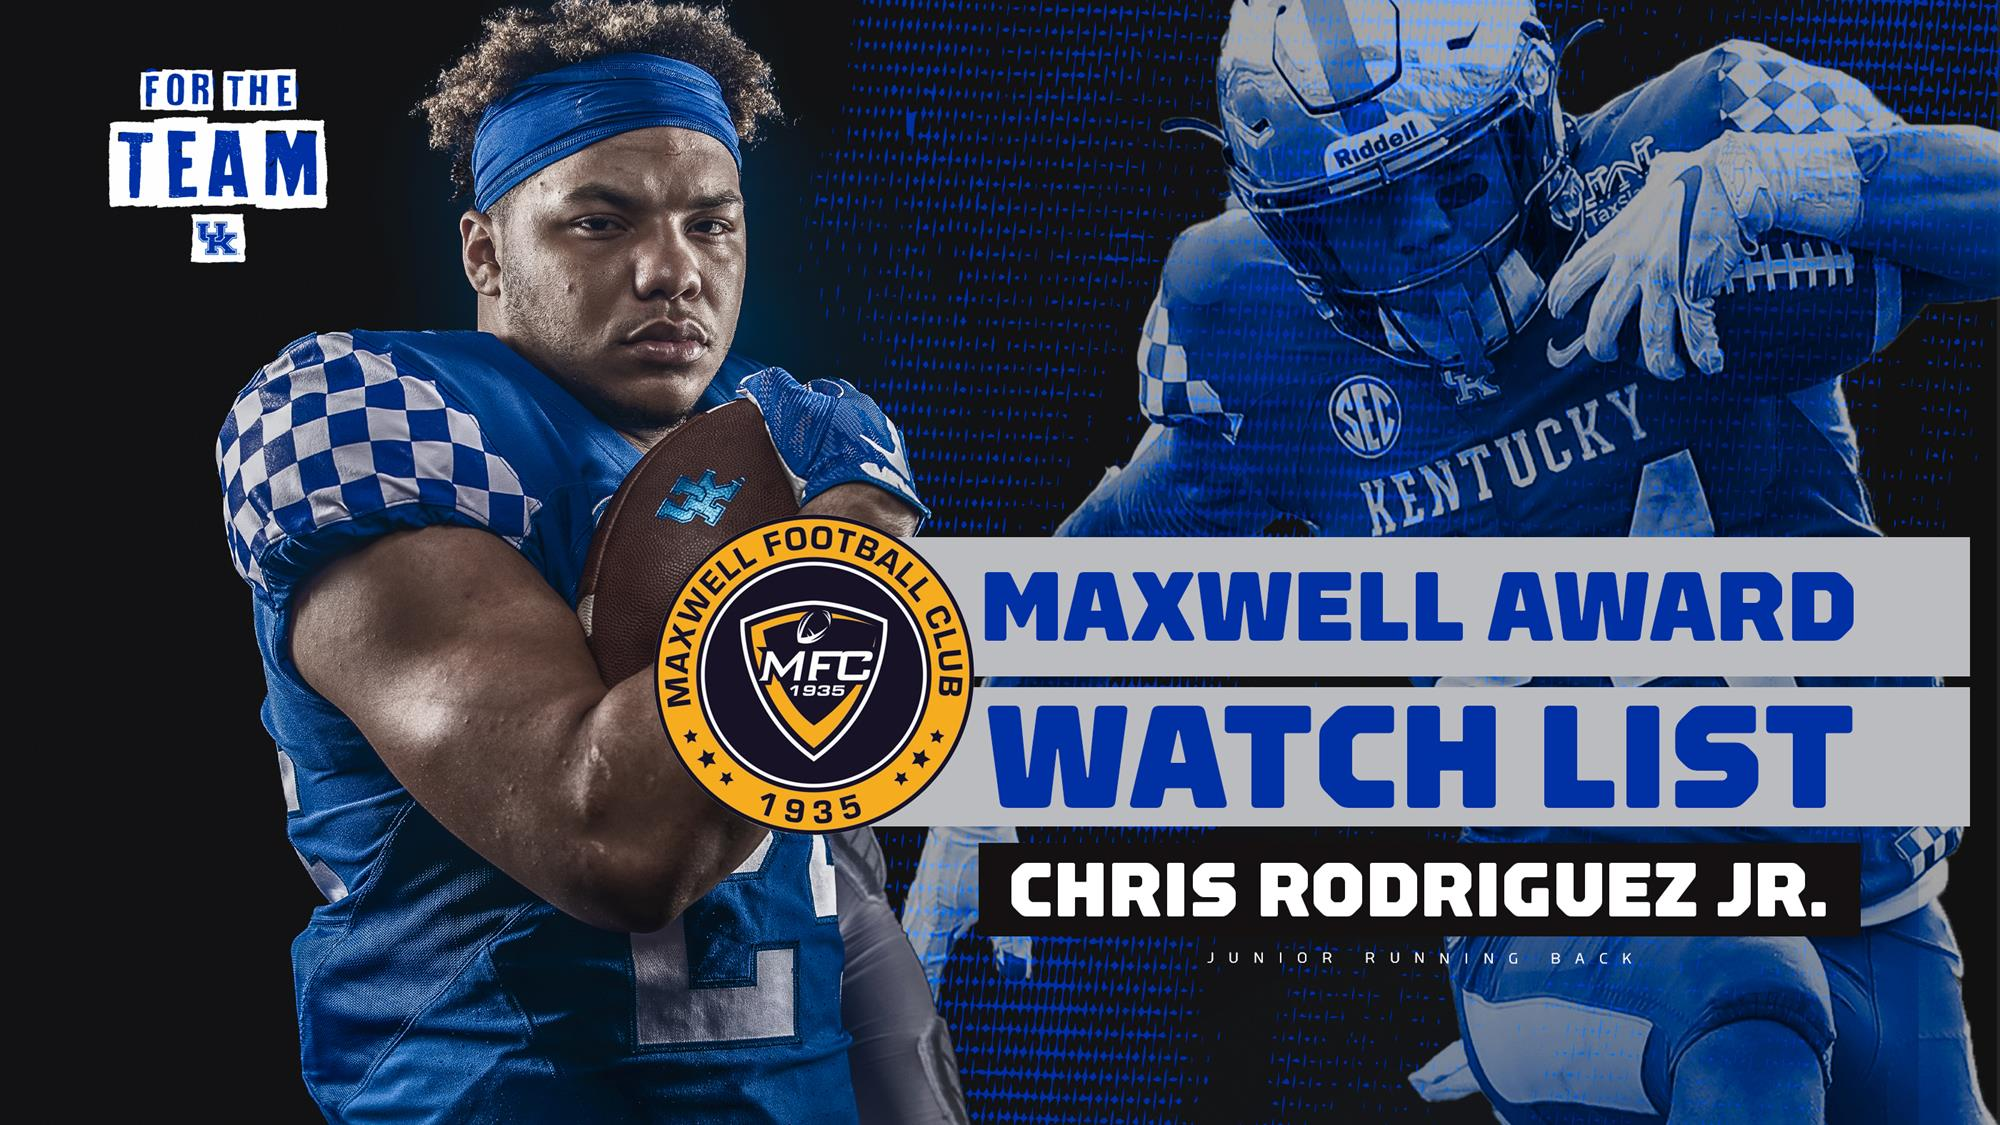 Chris Rodriguez Jr. Named to Maxwell Award Watch List